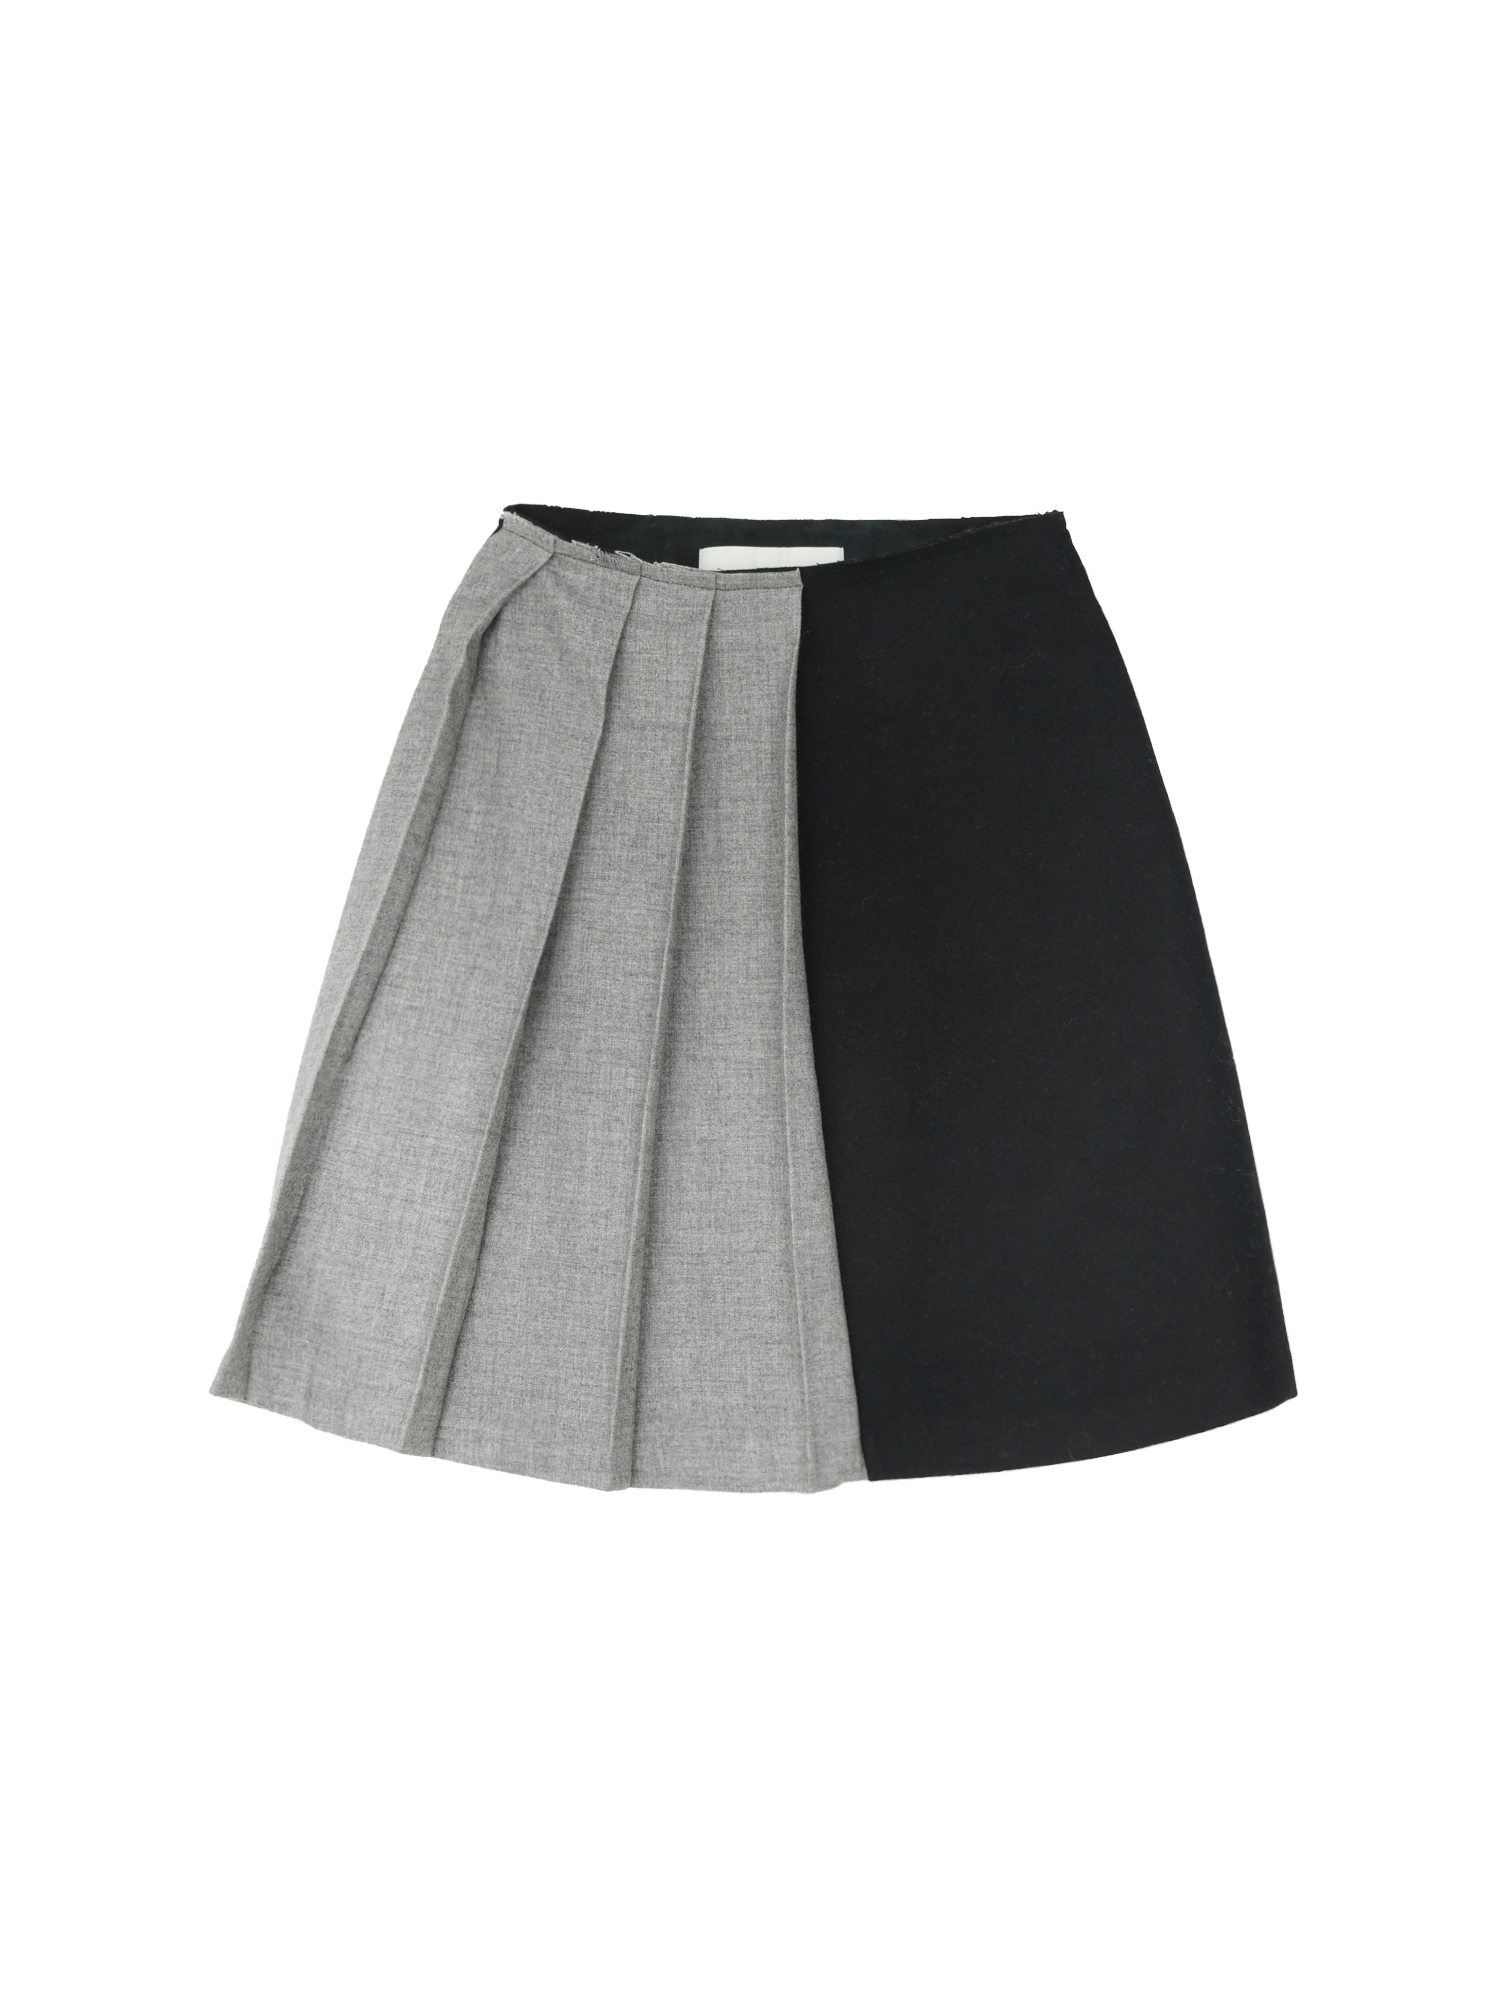 Wool Double Pleated Skirt - Grey Black